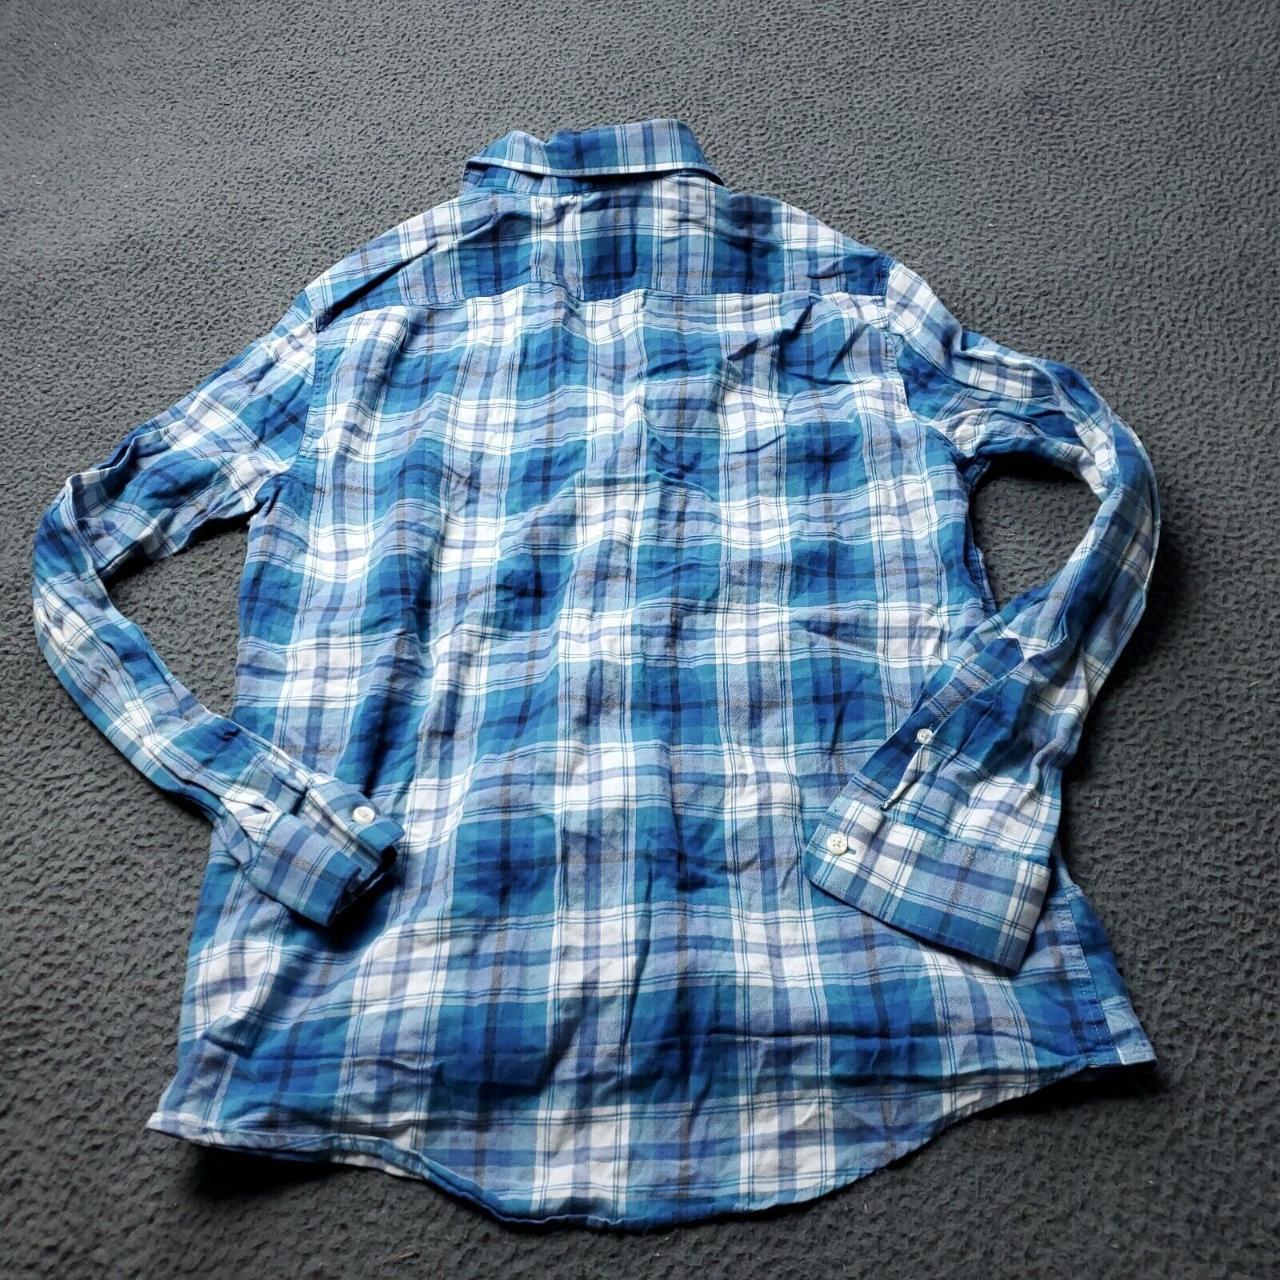 Jack Wills Men's Blue Shirt (4)